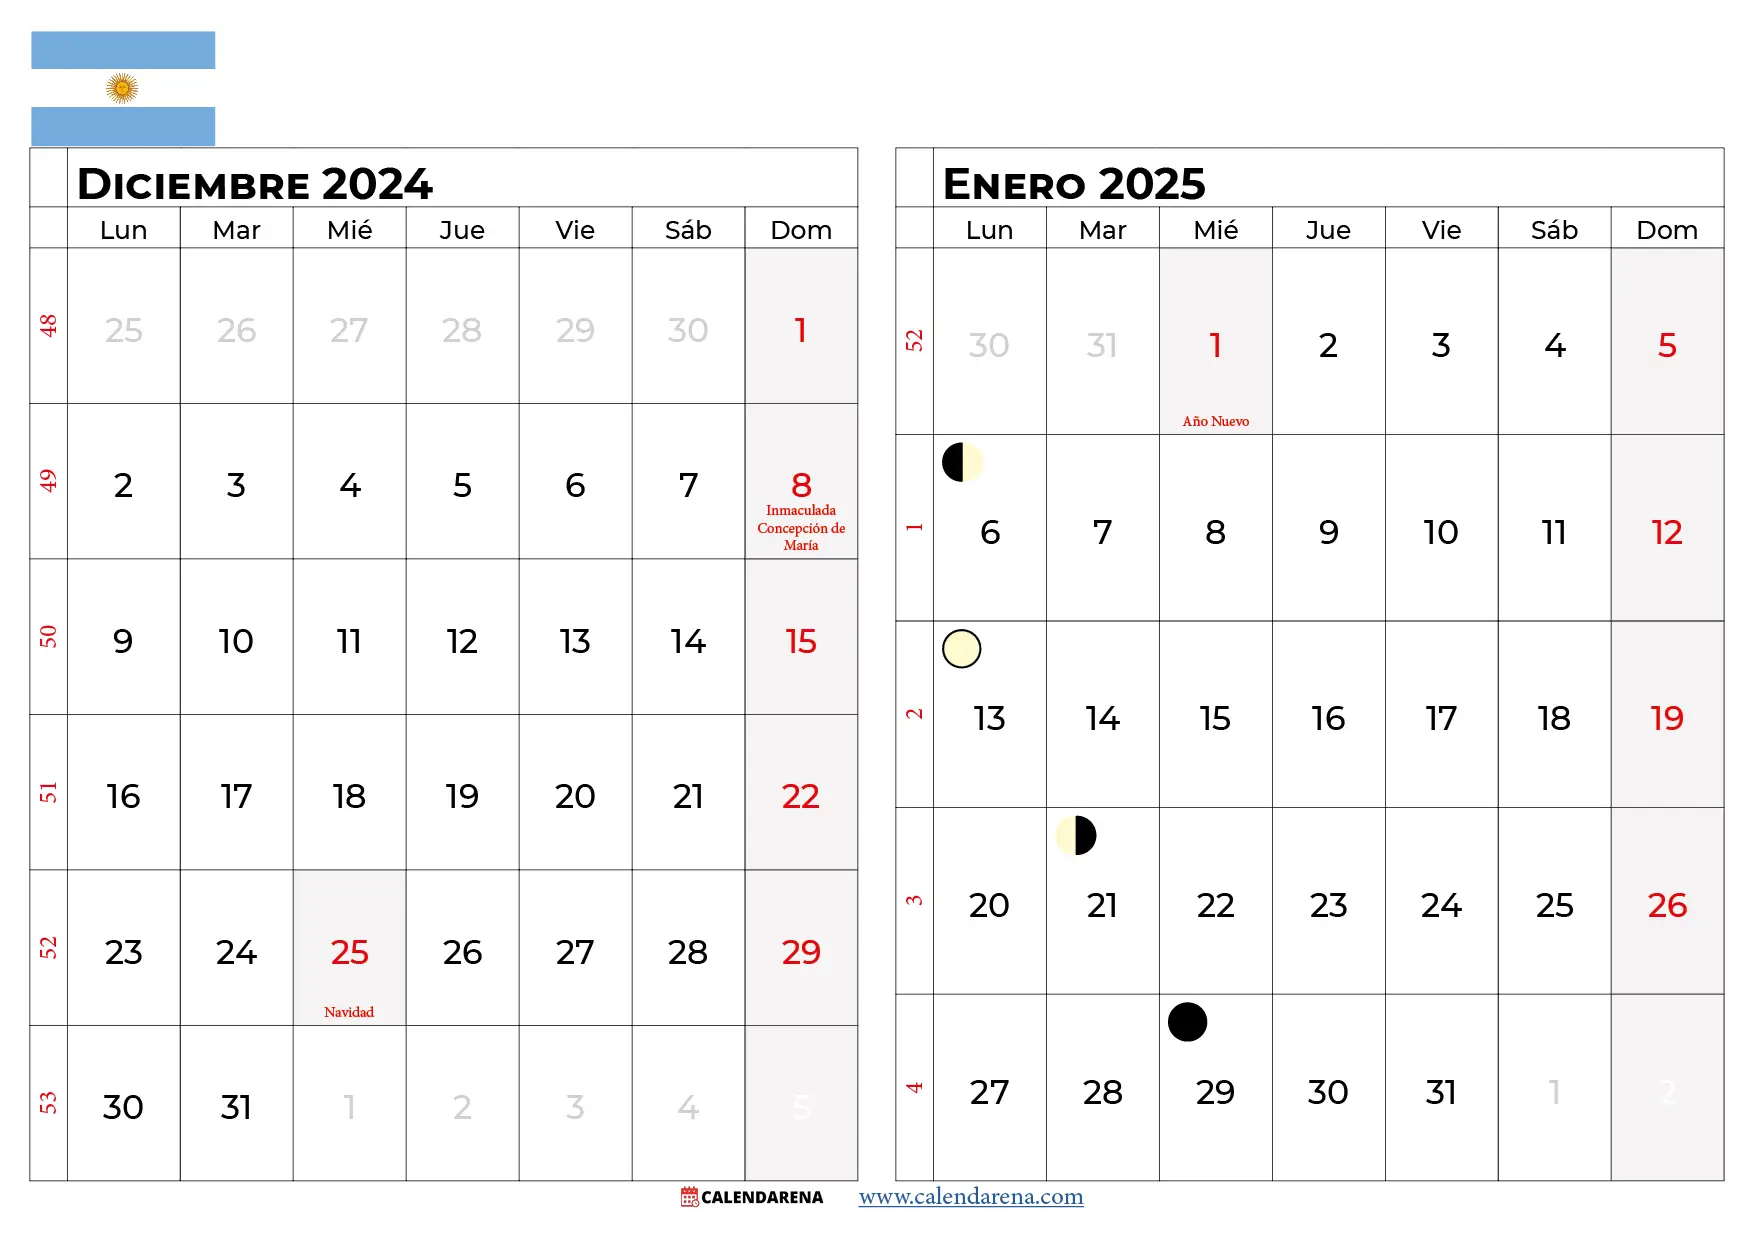 Calendario Diciembre 2024 Enero 2025